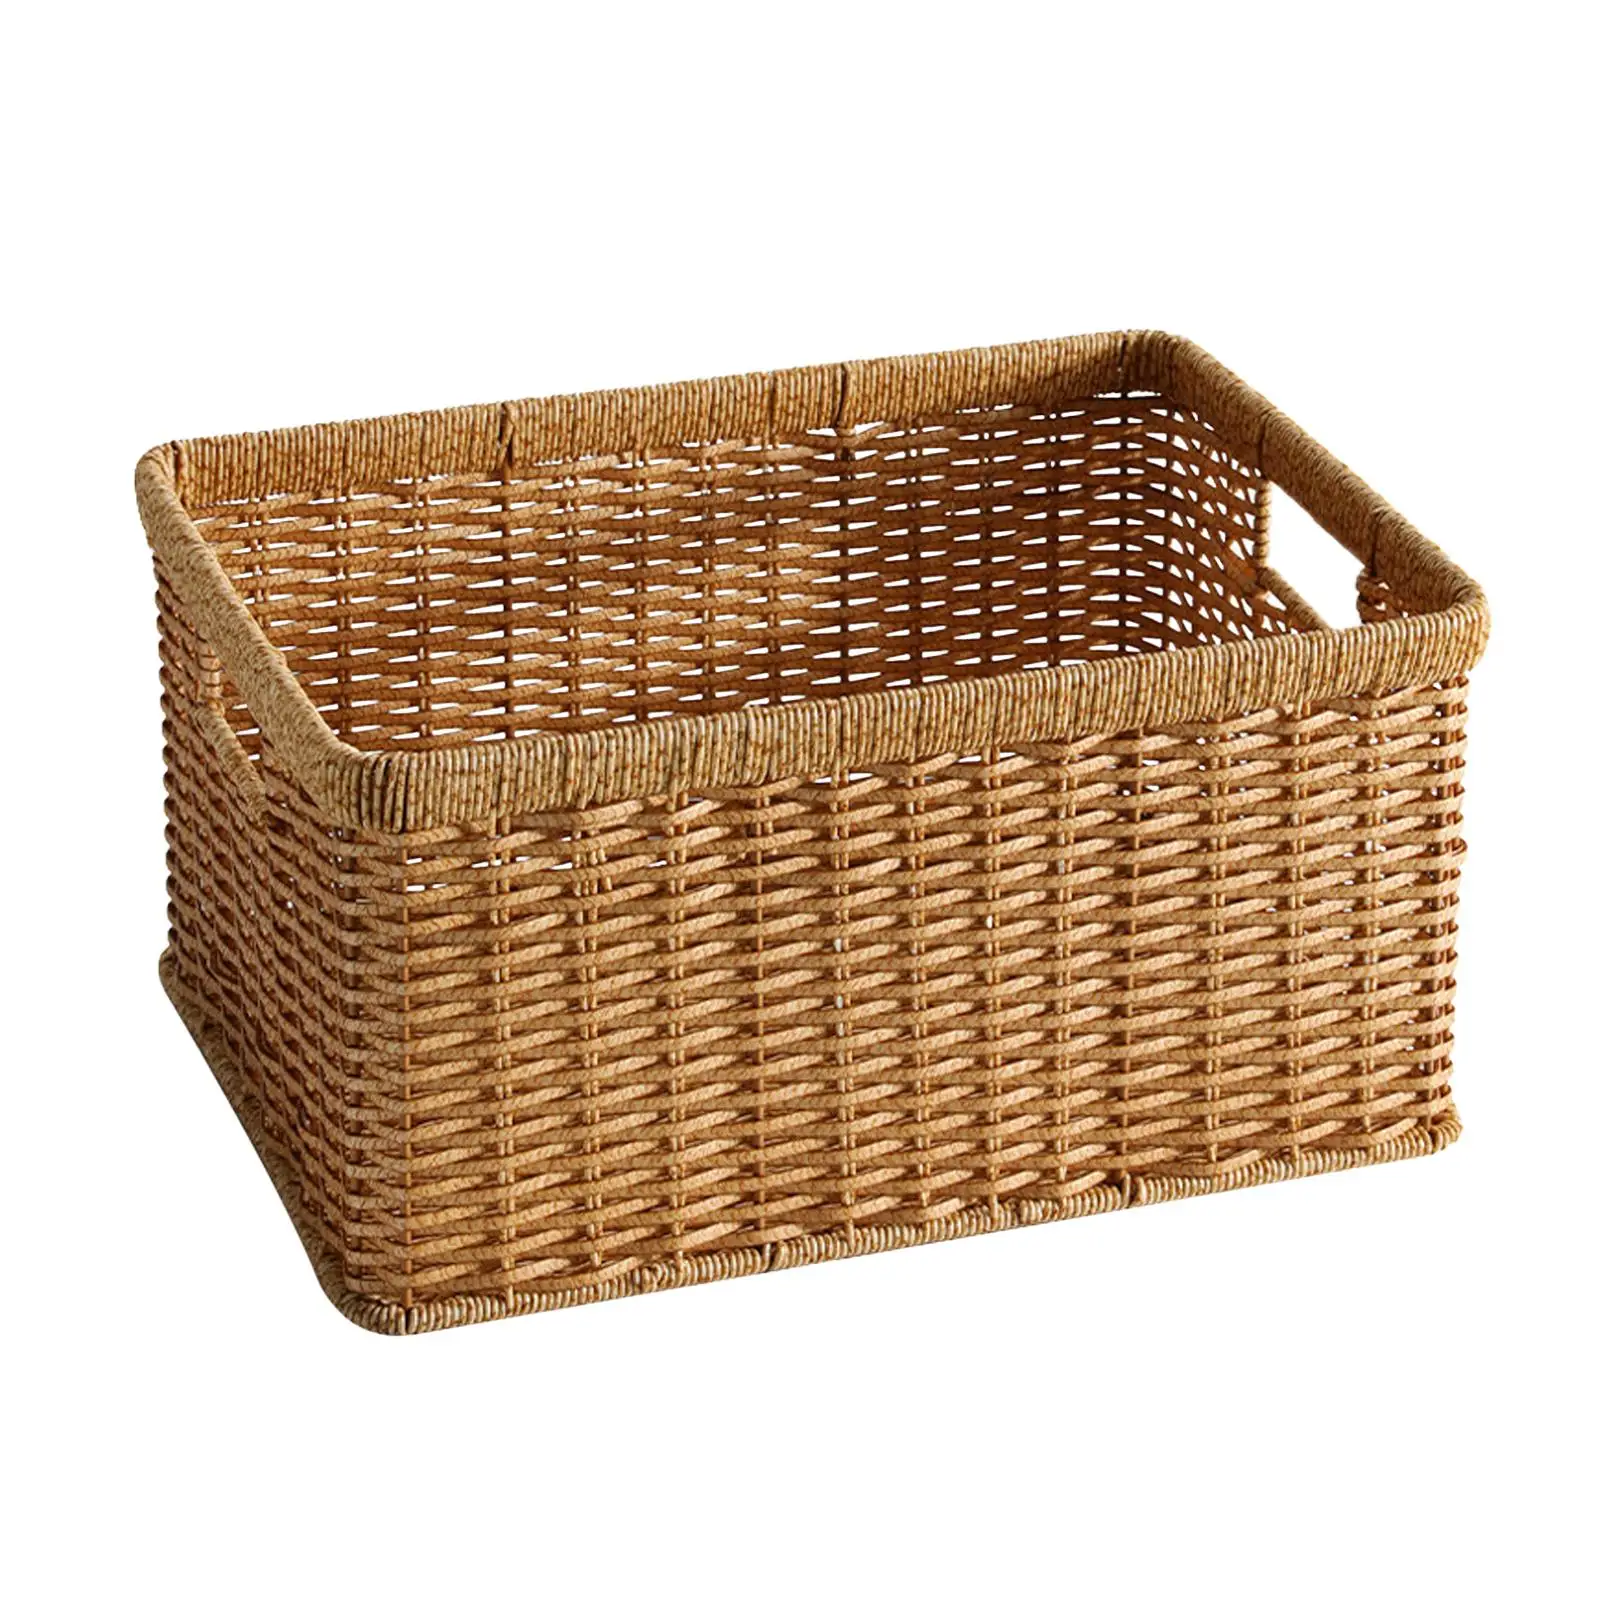 Handmade Basket Rectangle Picnic Basket Storing Snacks, Household Cleaning Hand Woven Storage Basket for Cabinets Bathroom